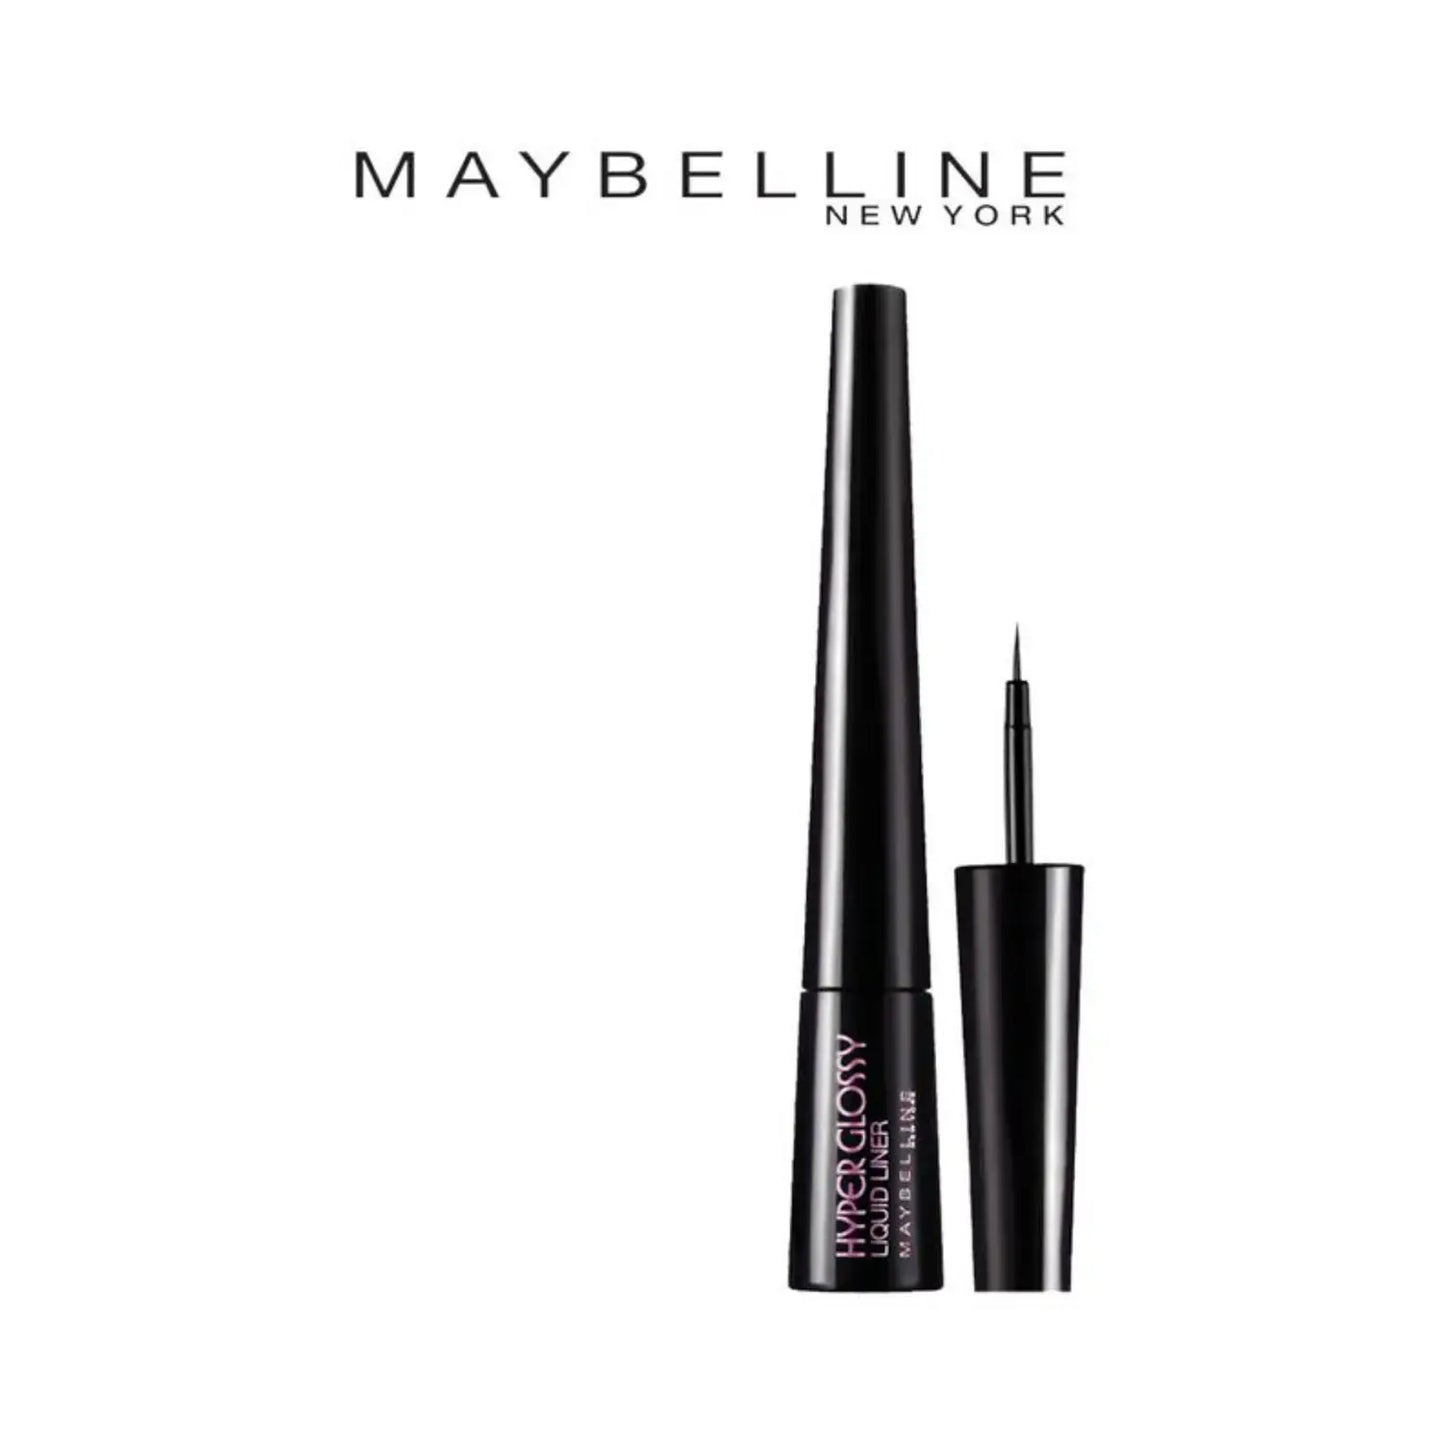 Maybelline New York Hyper Glossy Liquid Eyeliner - Black (3g)